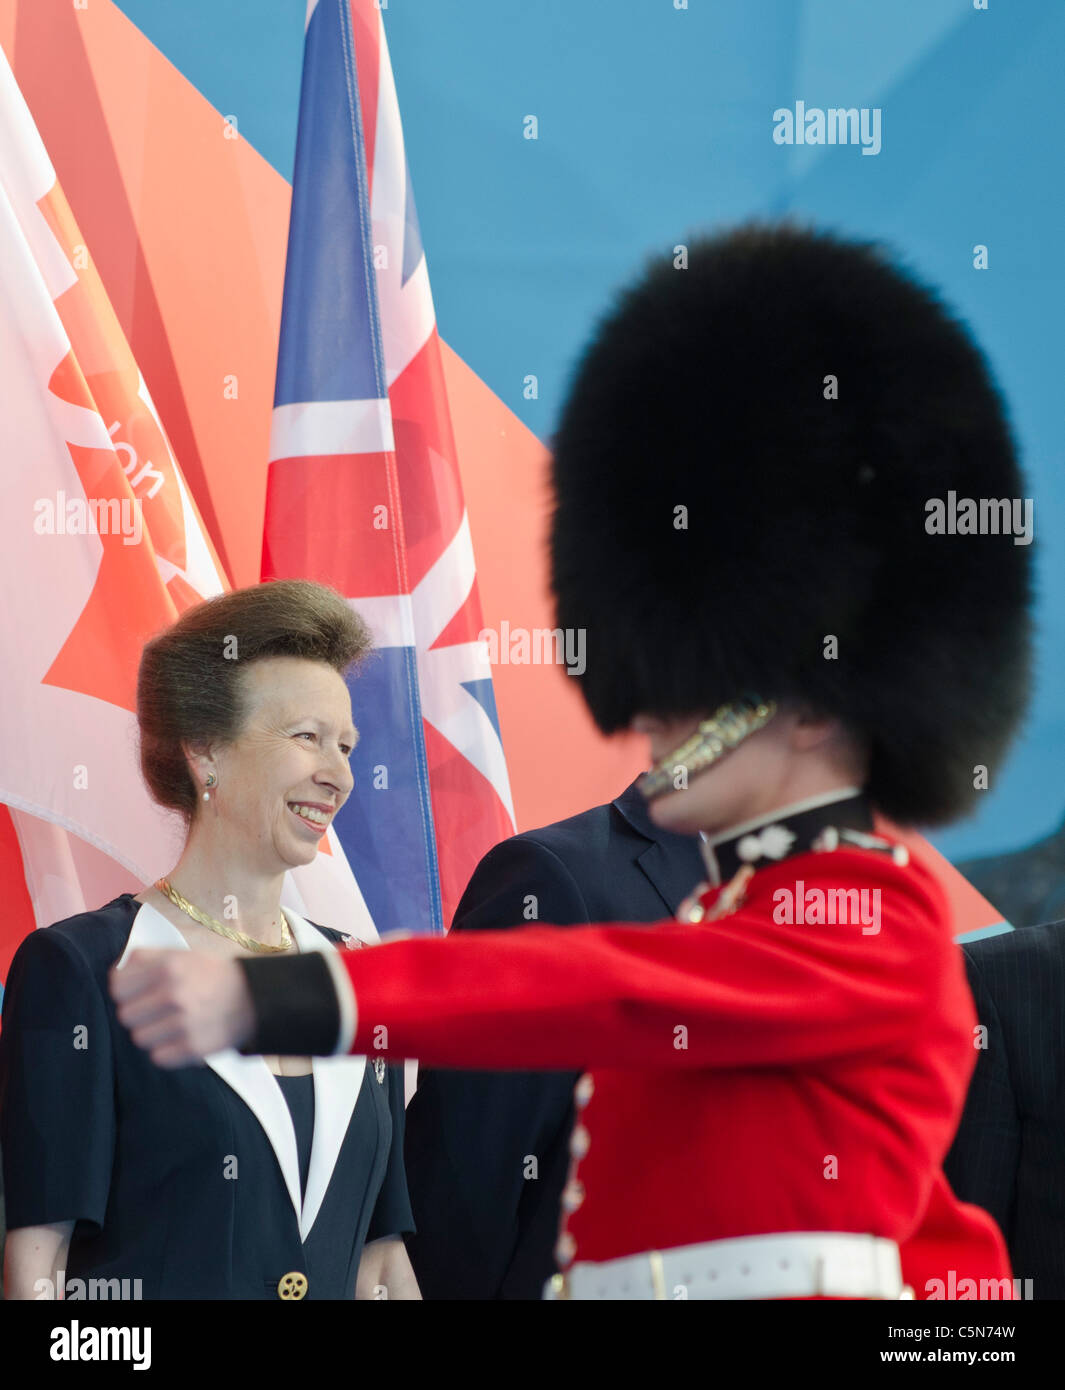 Princess Royal (Prinzessin Anne) und Scots Gardist "1 Jahr vor" London 2012 Olympics Trafalgar Square Stockfoto